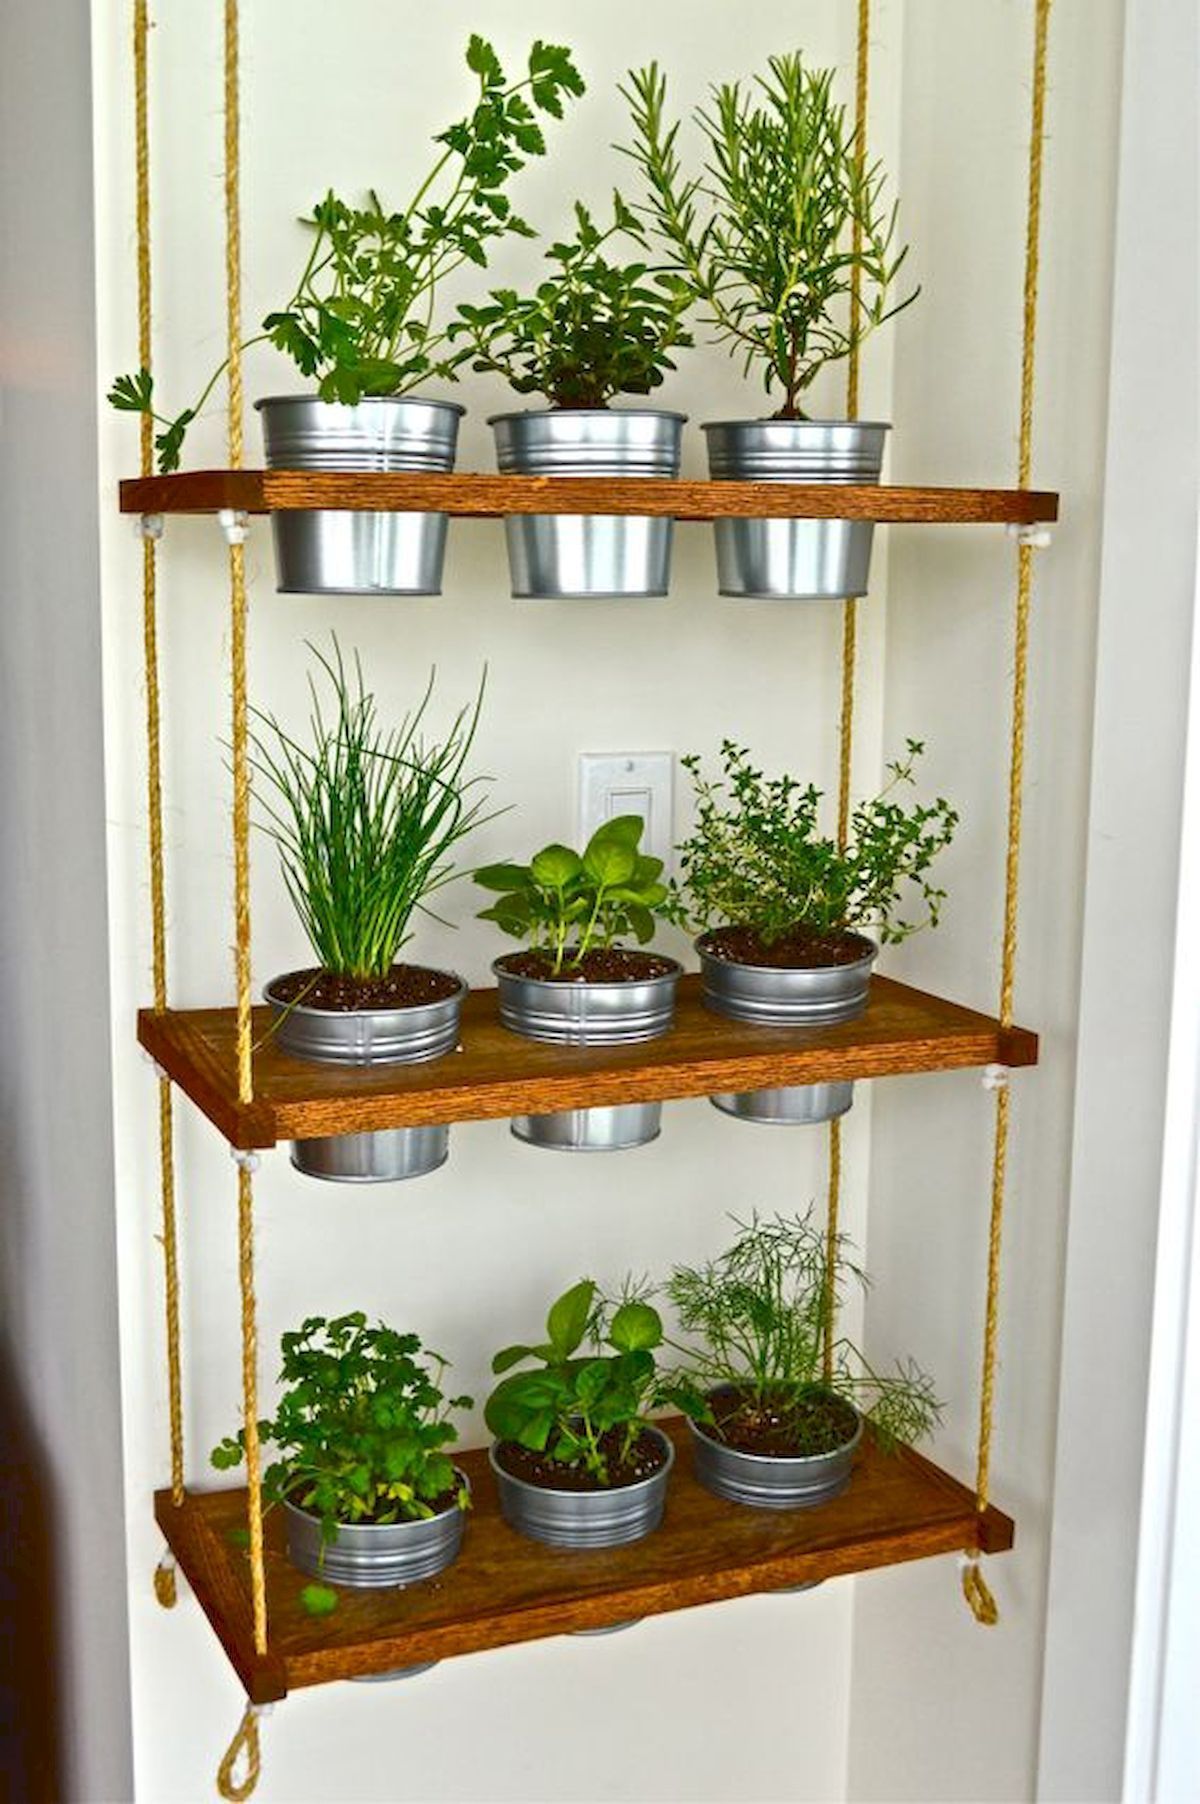 Herb Garden Indoor Design Ideas For Summer -   13 garden design Inspiration indoor herbs ideas